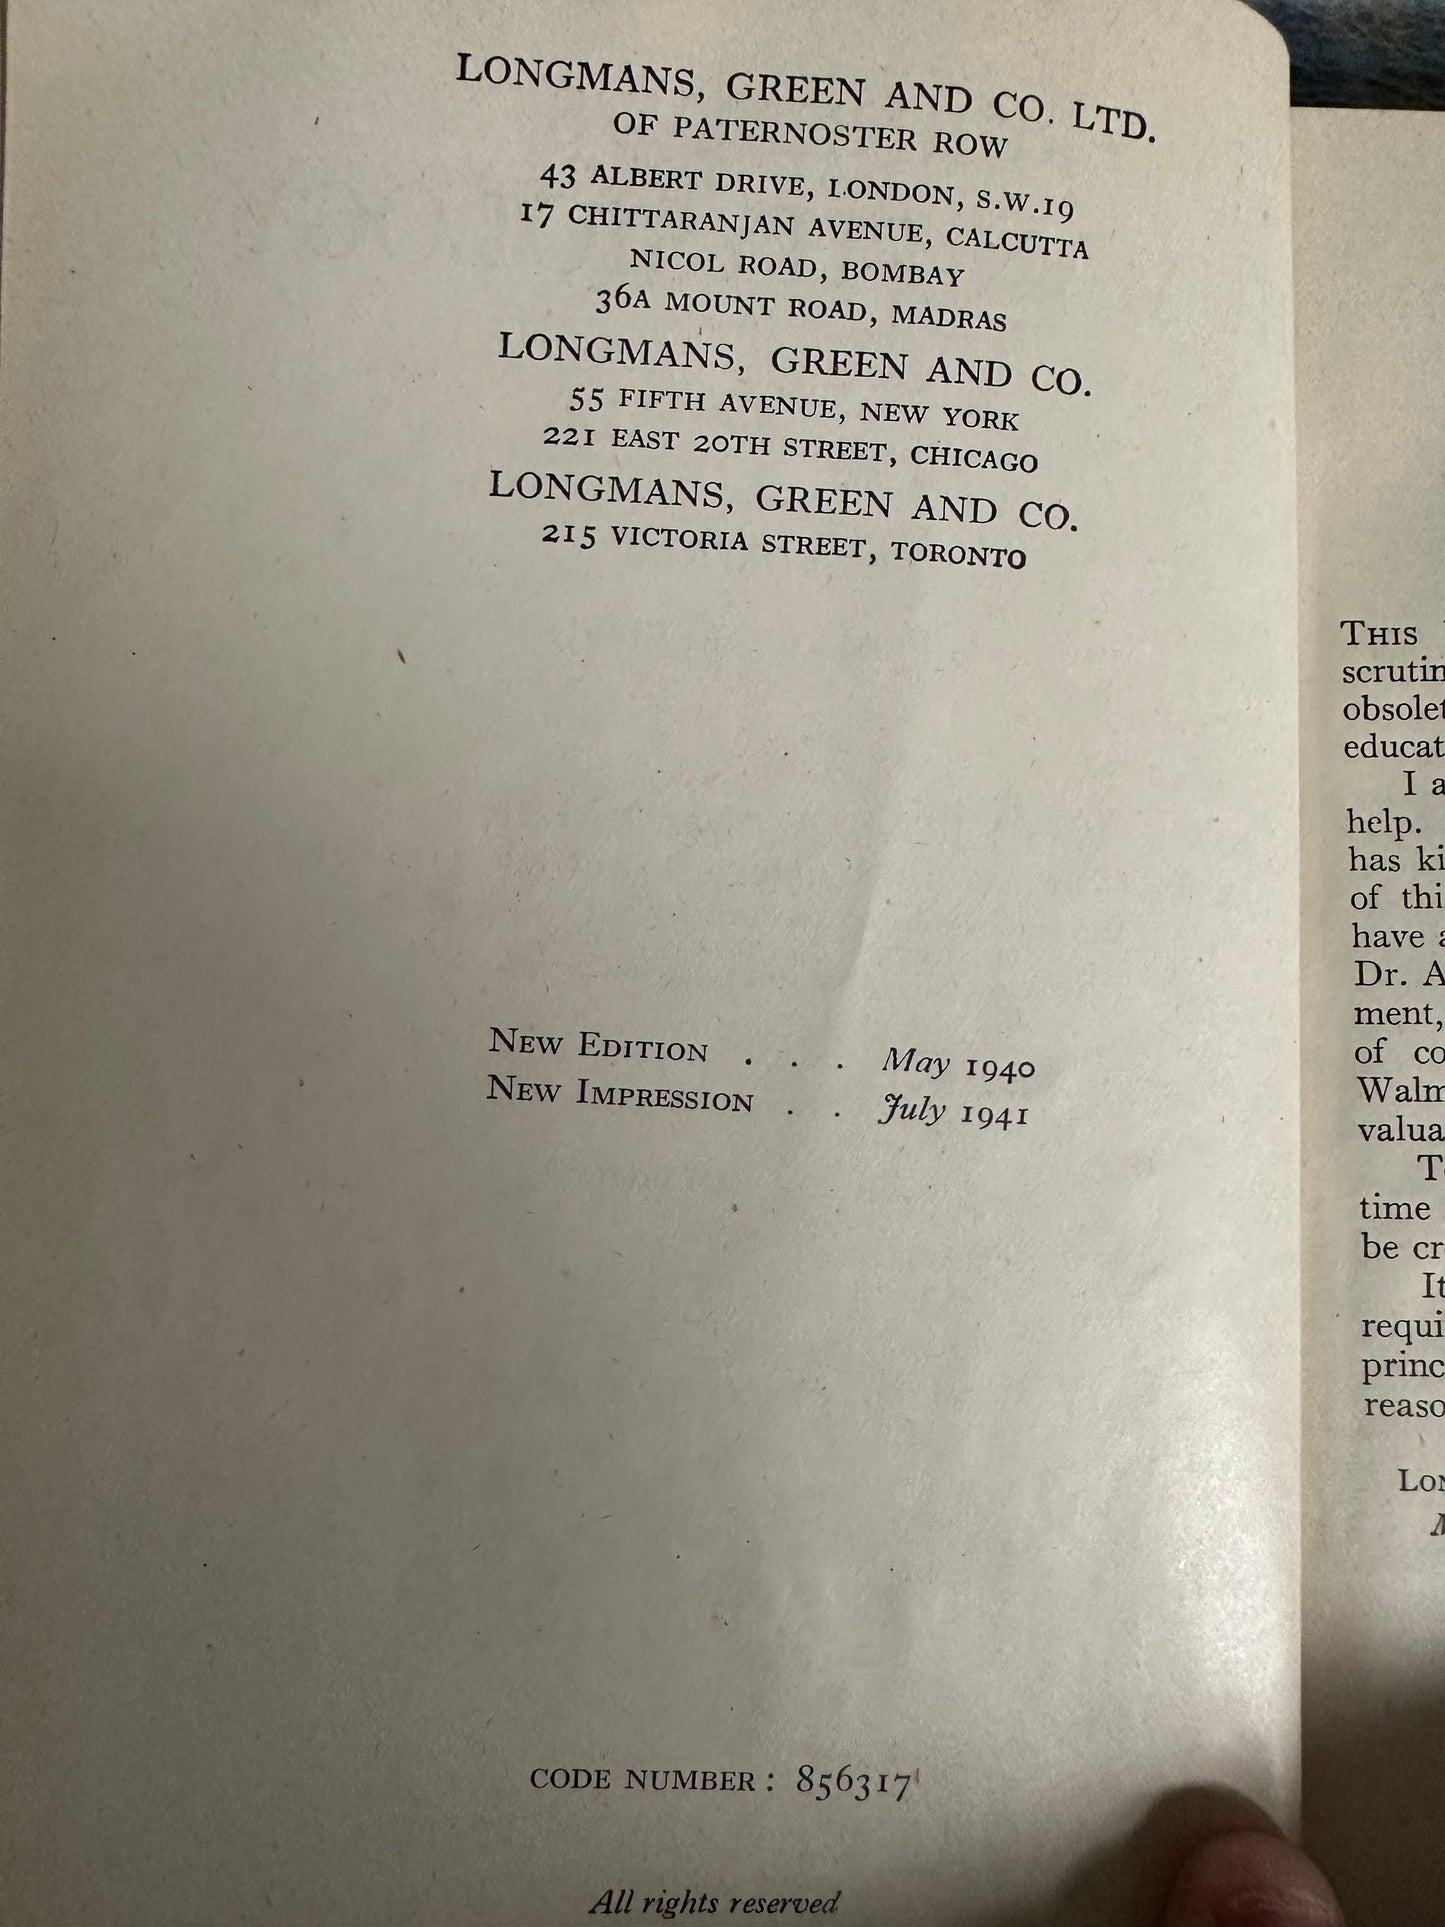 1941 Furneaux’s Human Physiology - W. A. M. Smart (Nurses Edition)Longmans, Green & Co Ltd